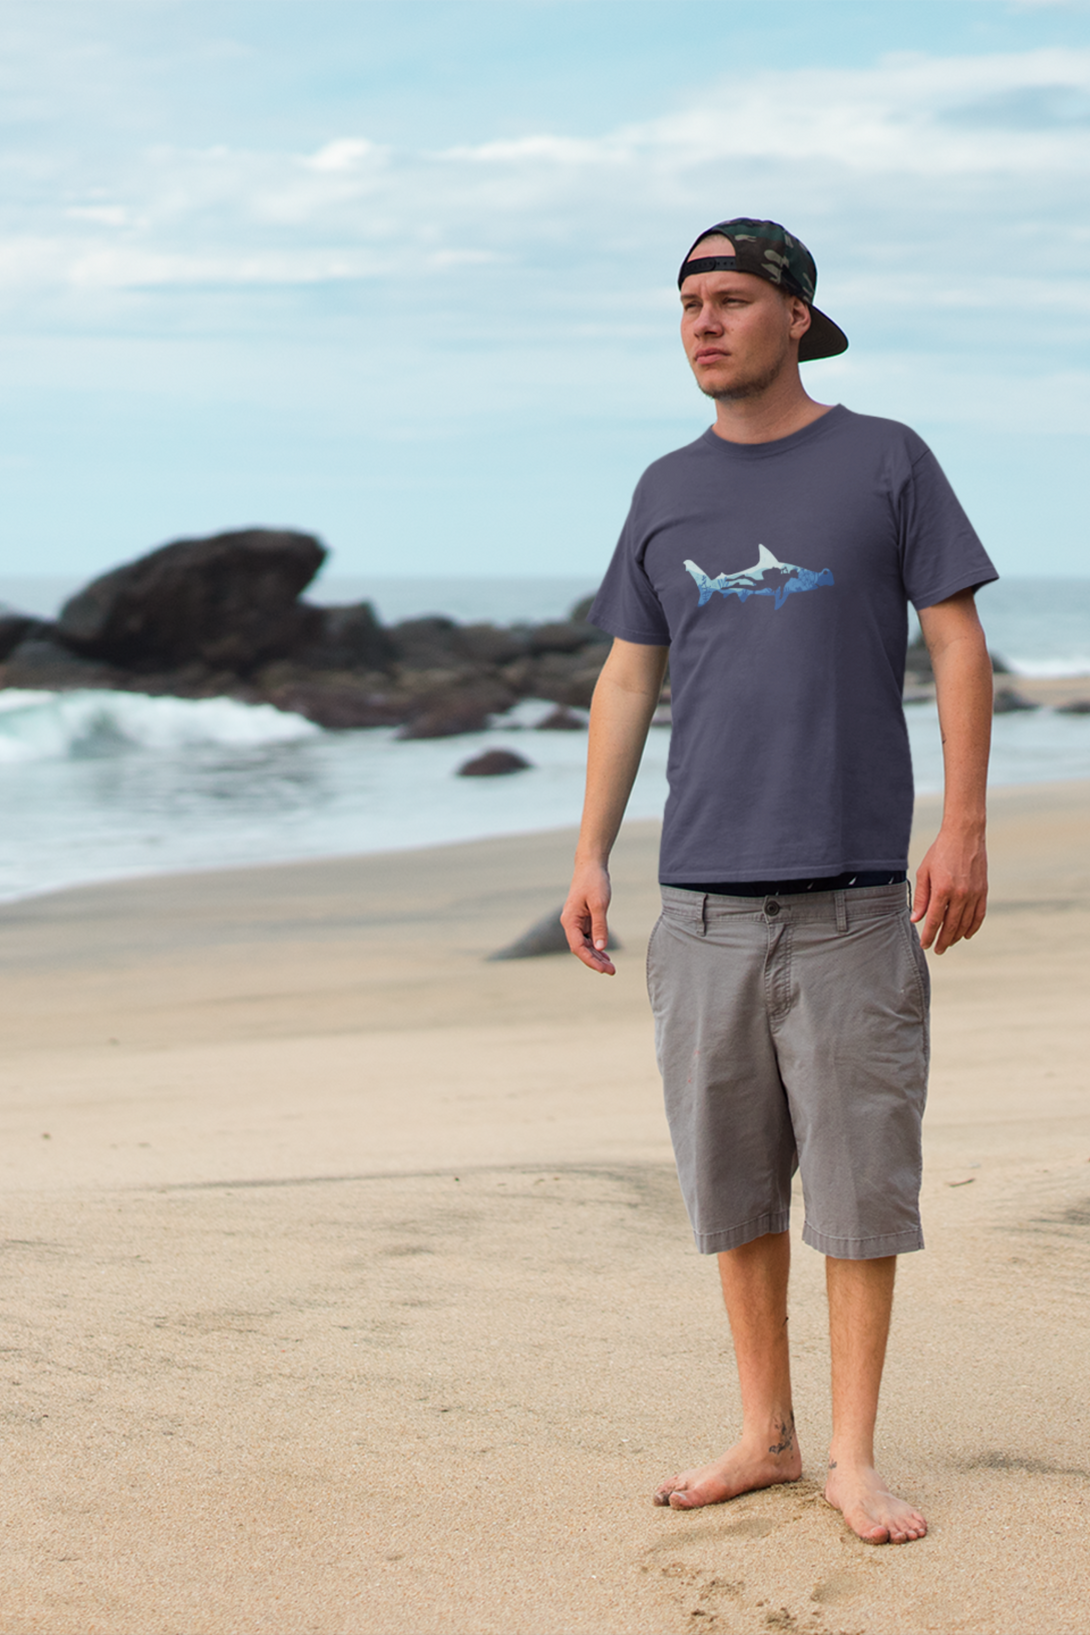 Hammerhead Shark Dive Printed T-Shirt For Men - WowWaves - 4